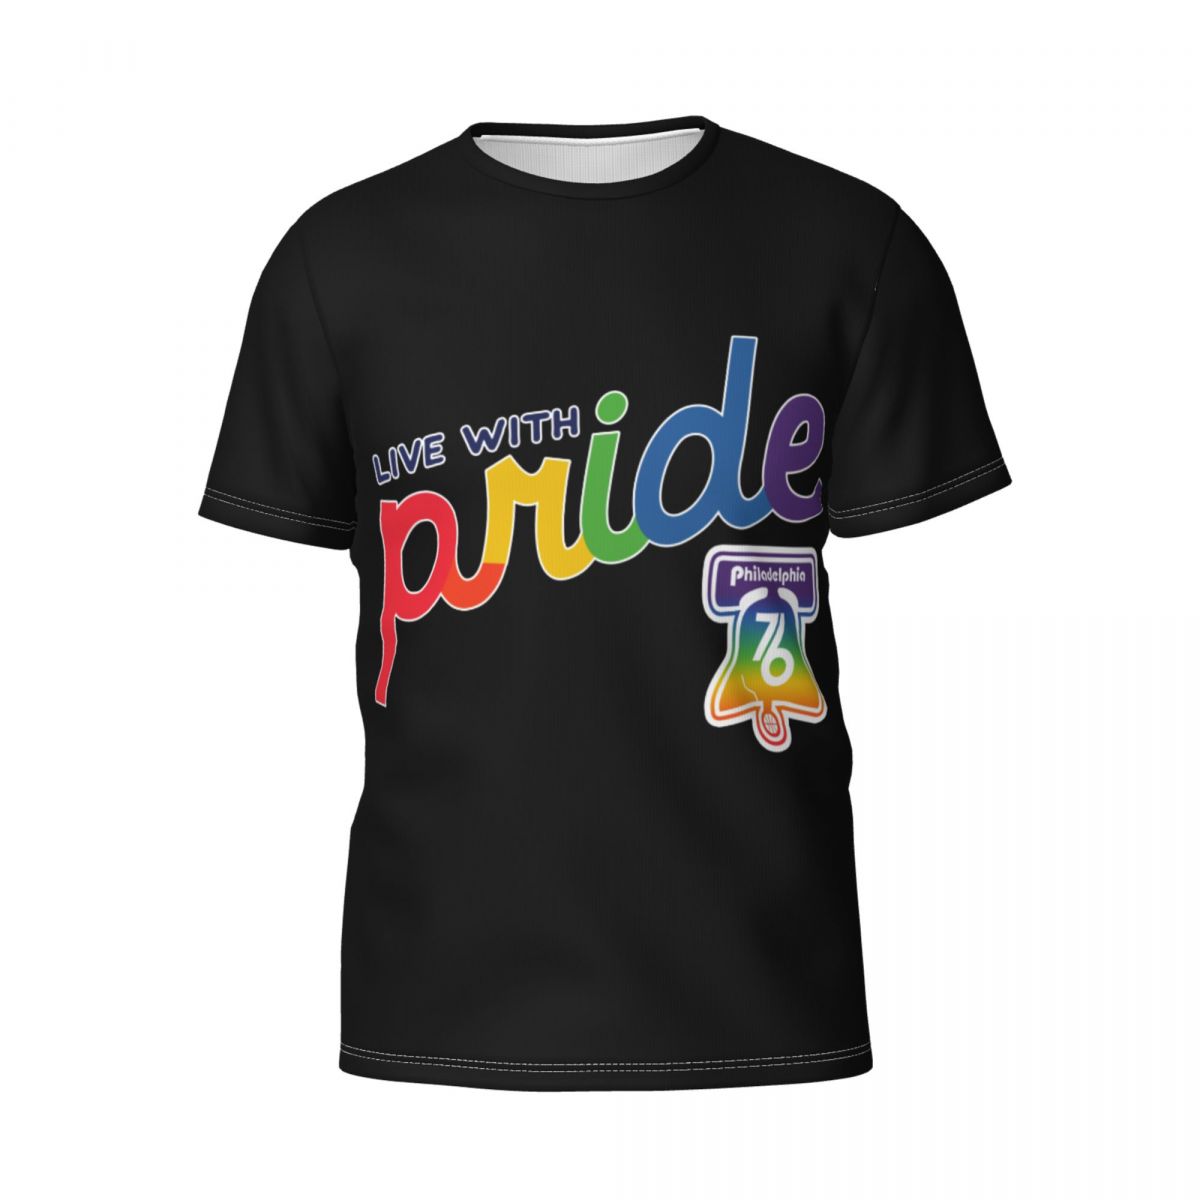 Philadelphia 76ers Live With Pride Printed Men's T-Shirt